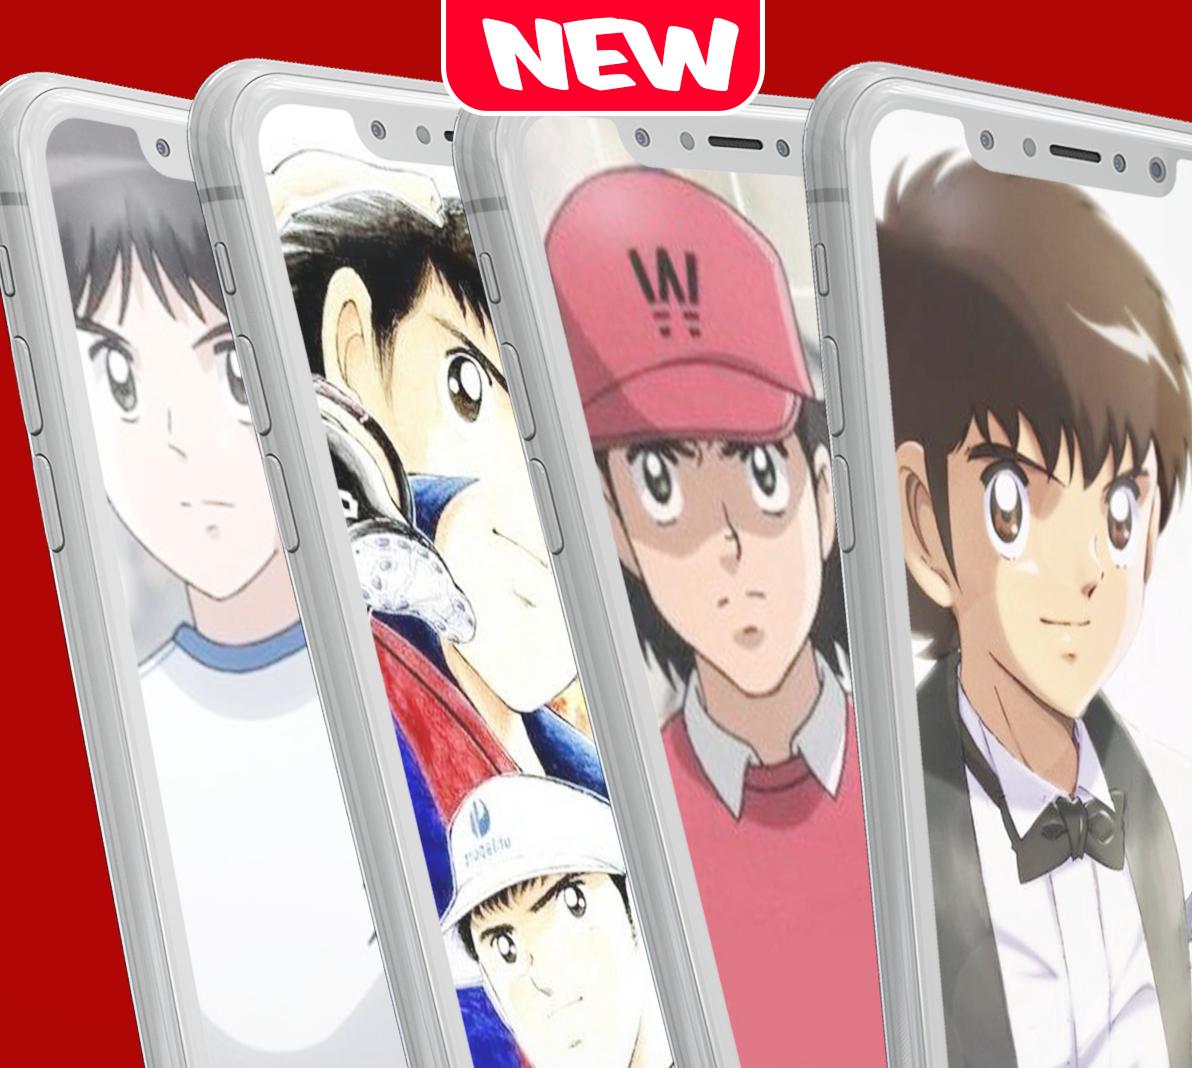 Captain Anime Tsubasa New dream team wallpapers APK pour Android Télécharger